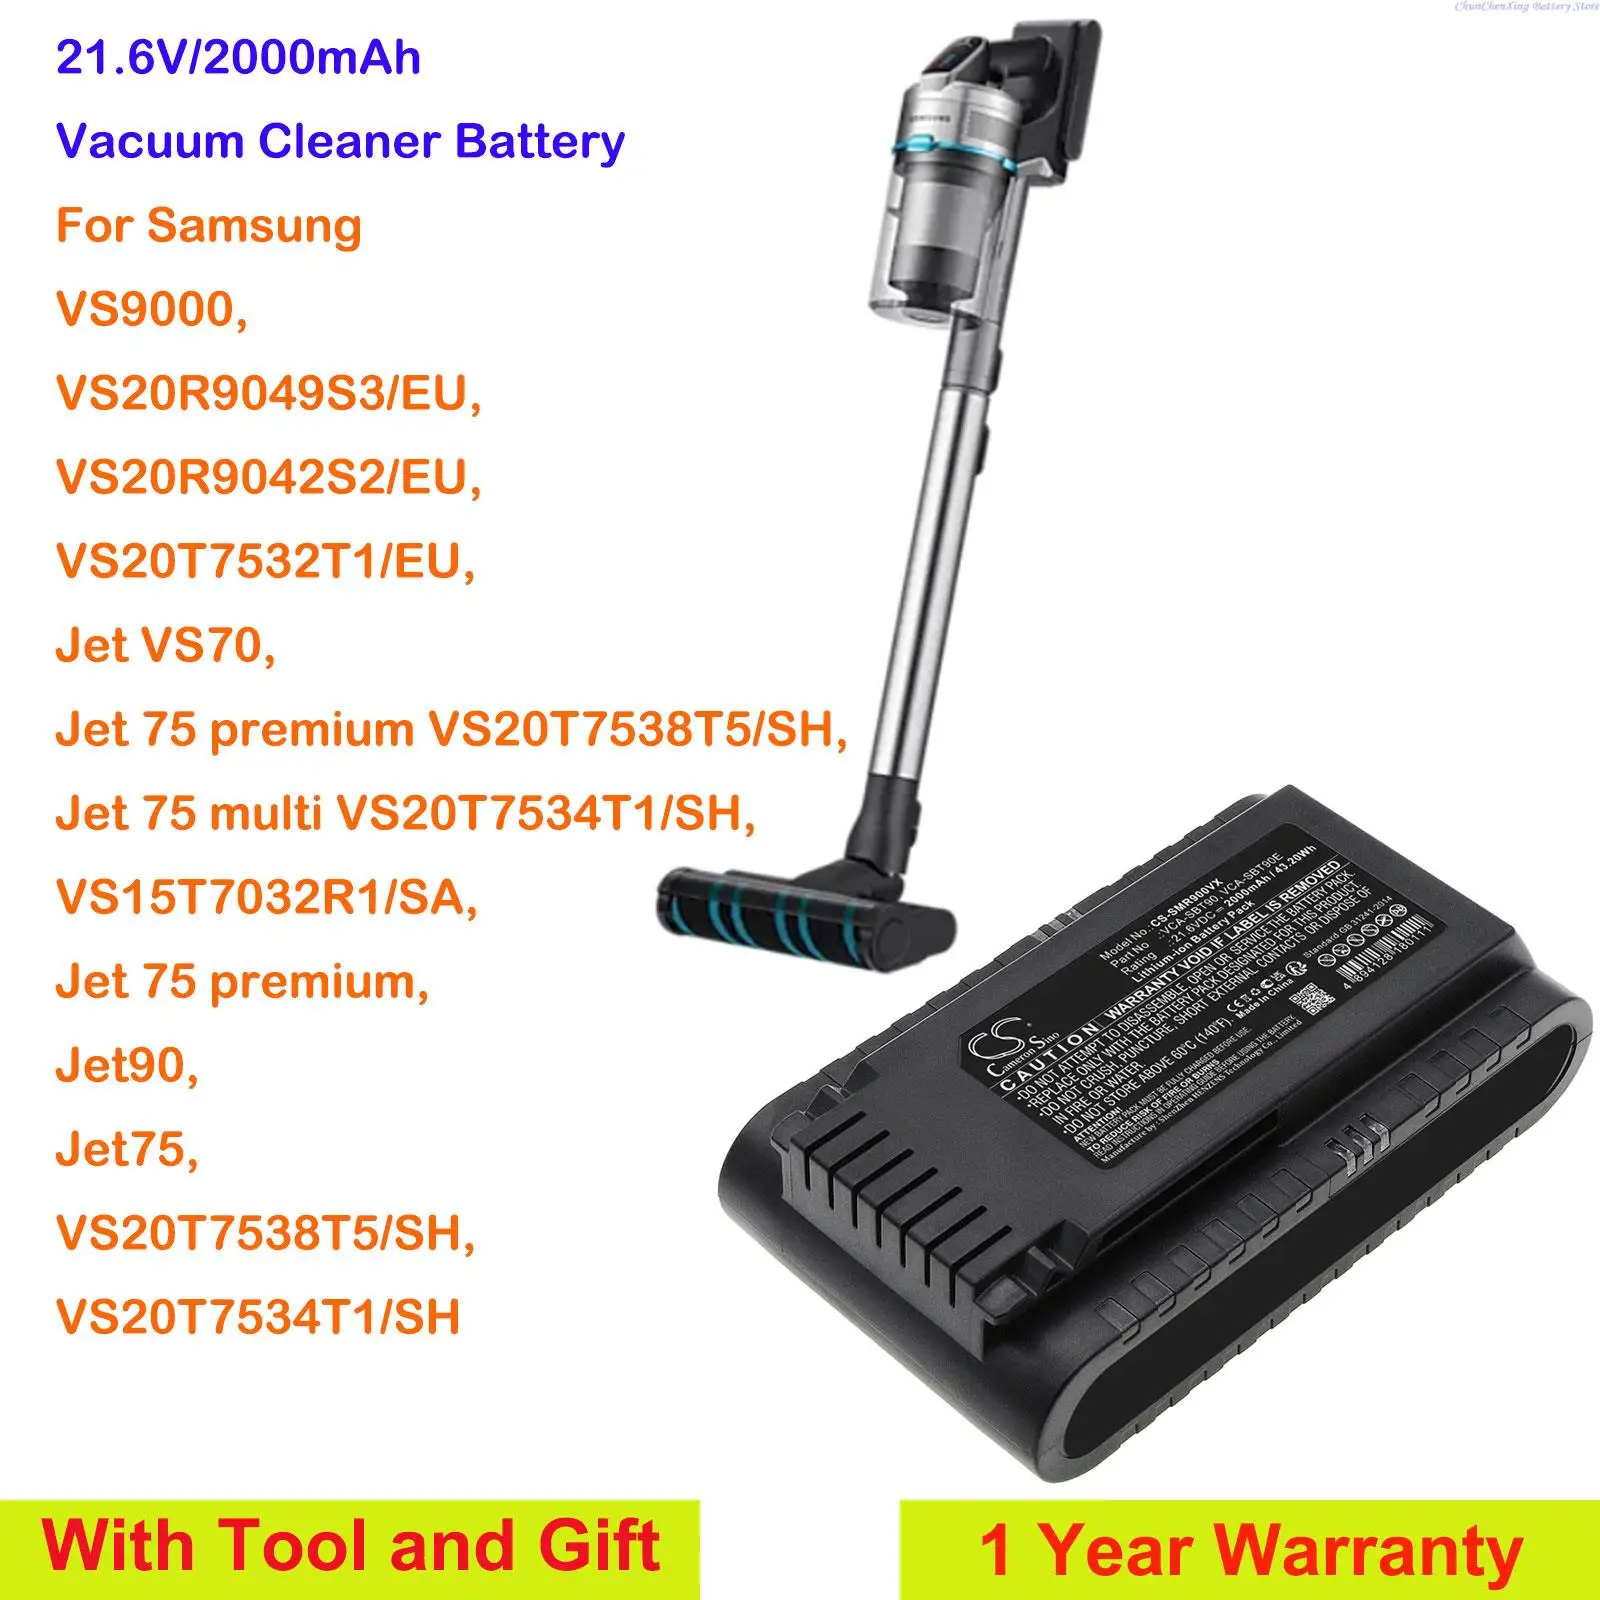 

OrangeYu 2000mAh Vacuum Cleaner Battery VCA-SBT90, VCA-SBT90E,DJ96-00221A for Samsung VS9000, Jet VS70, Jet90, Jet75, Jet 75